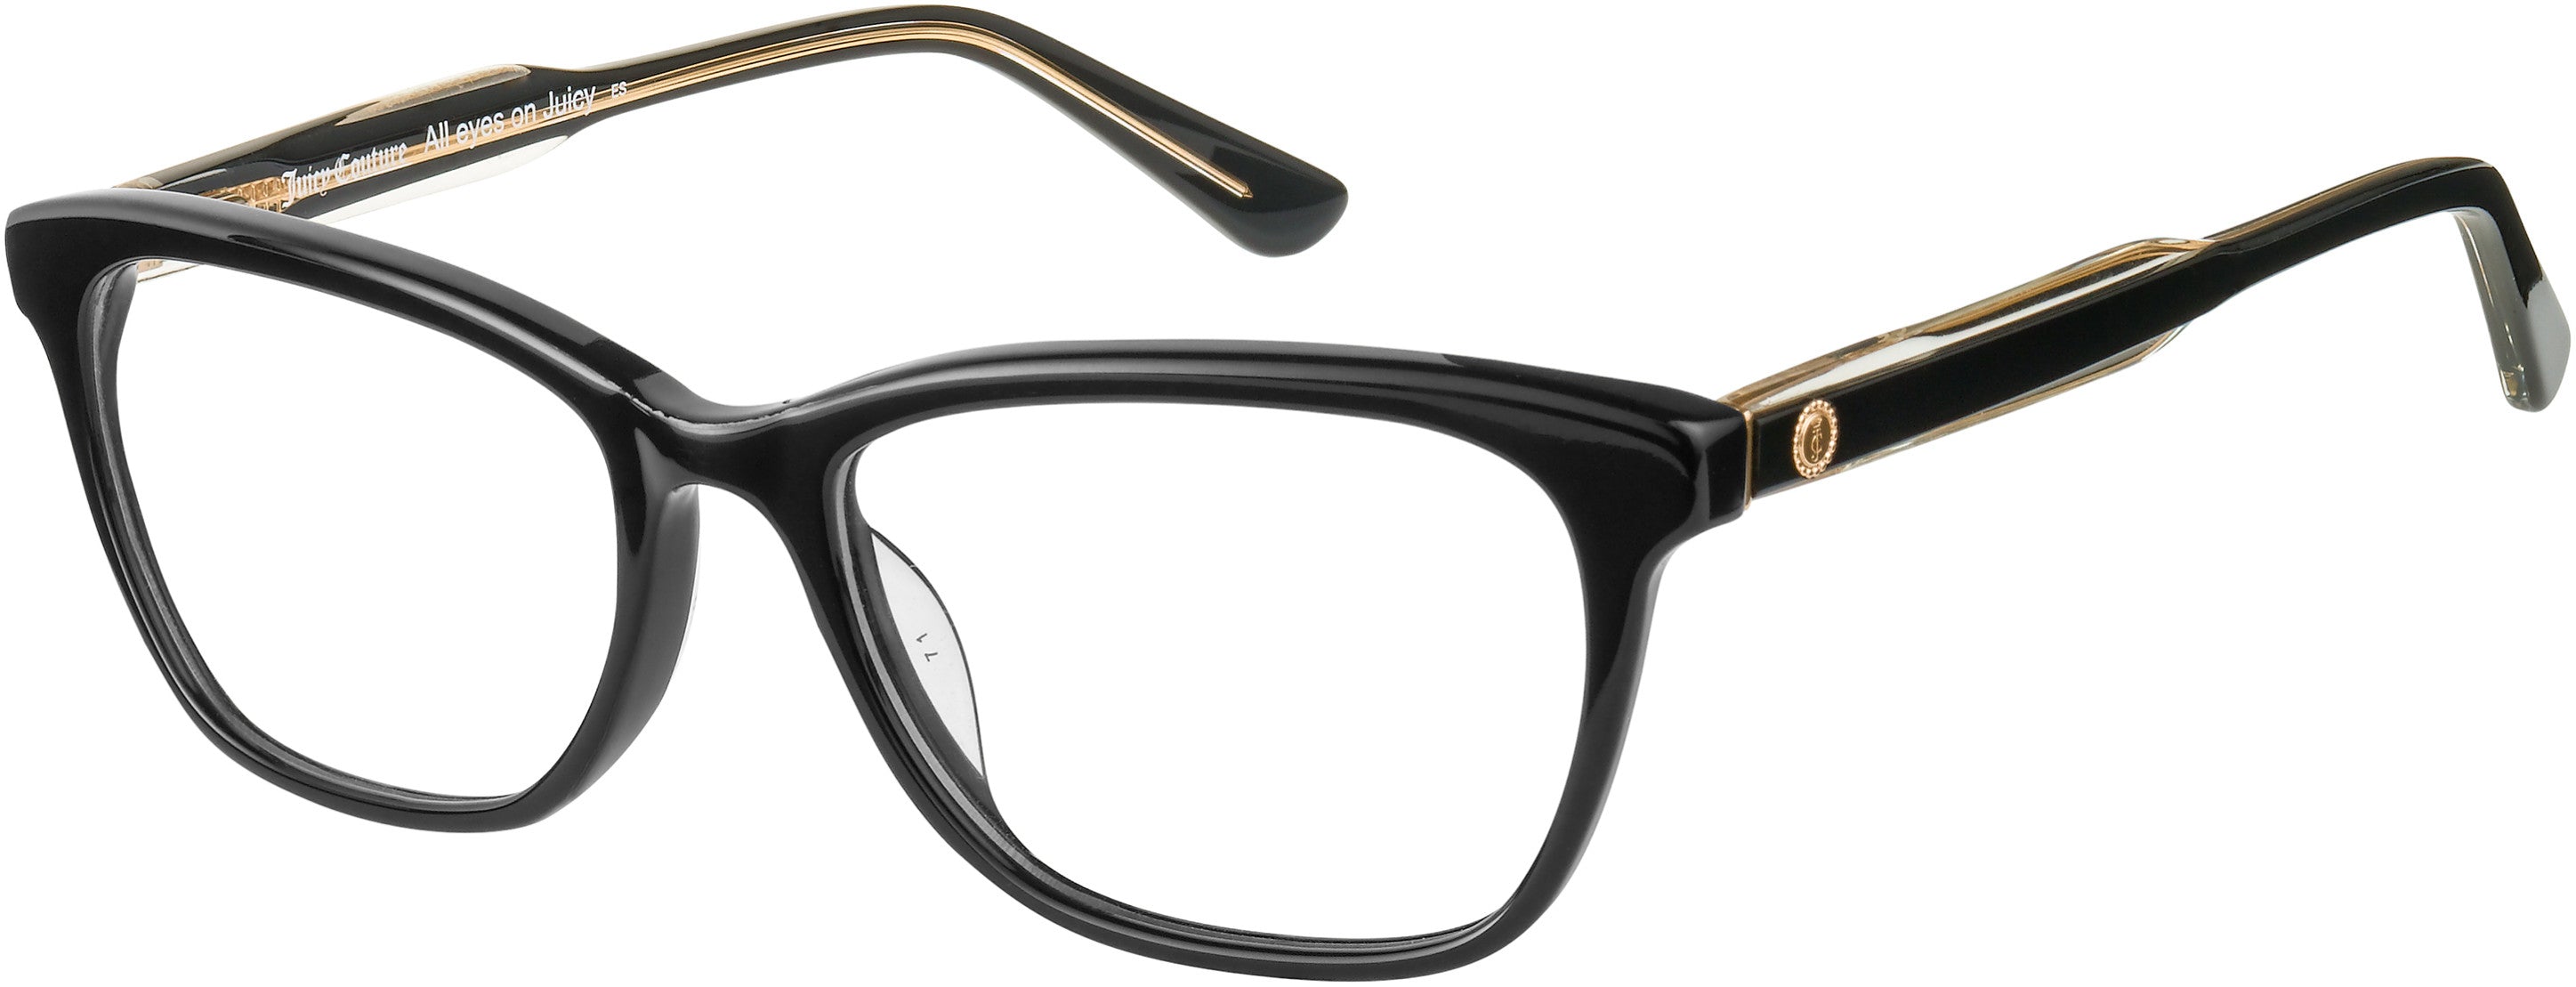 Juicy Couture Juicy 175 Rectangular Eyeglasses 0807-0807  Black (00 Demo Lens)